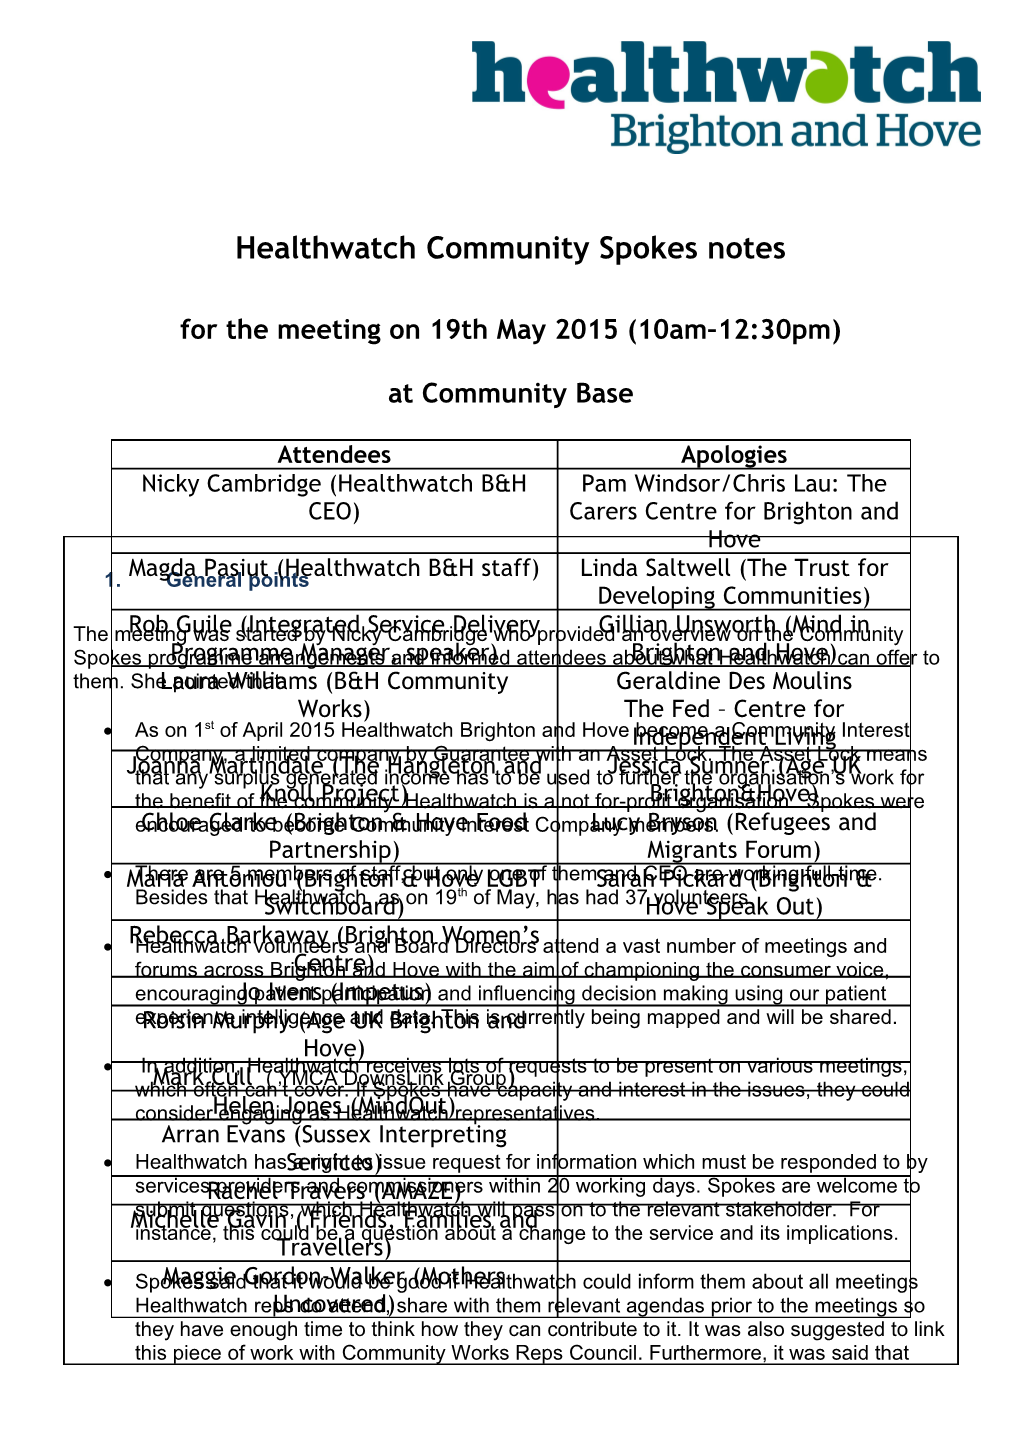 Healthwatch Community Spokes Notes